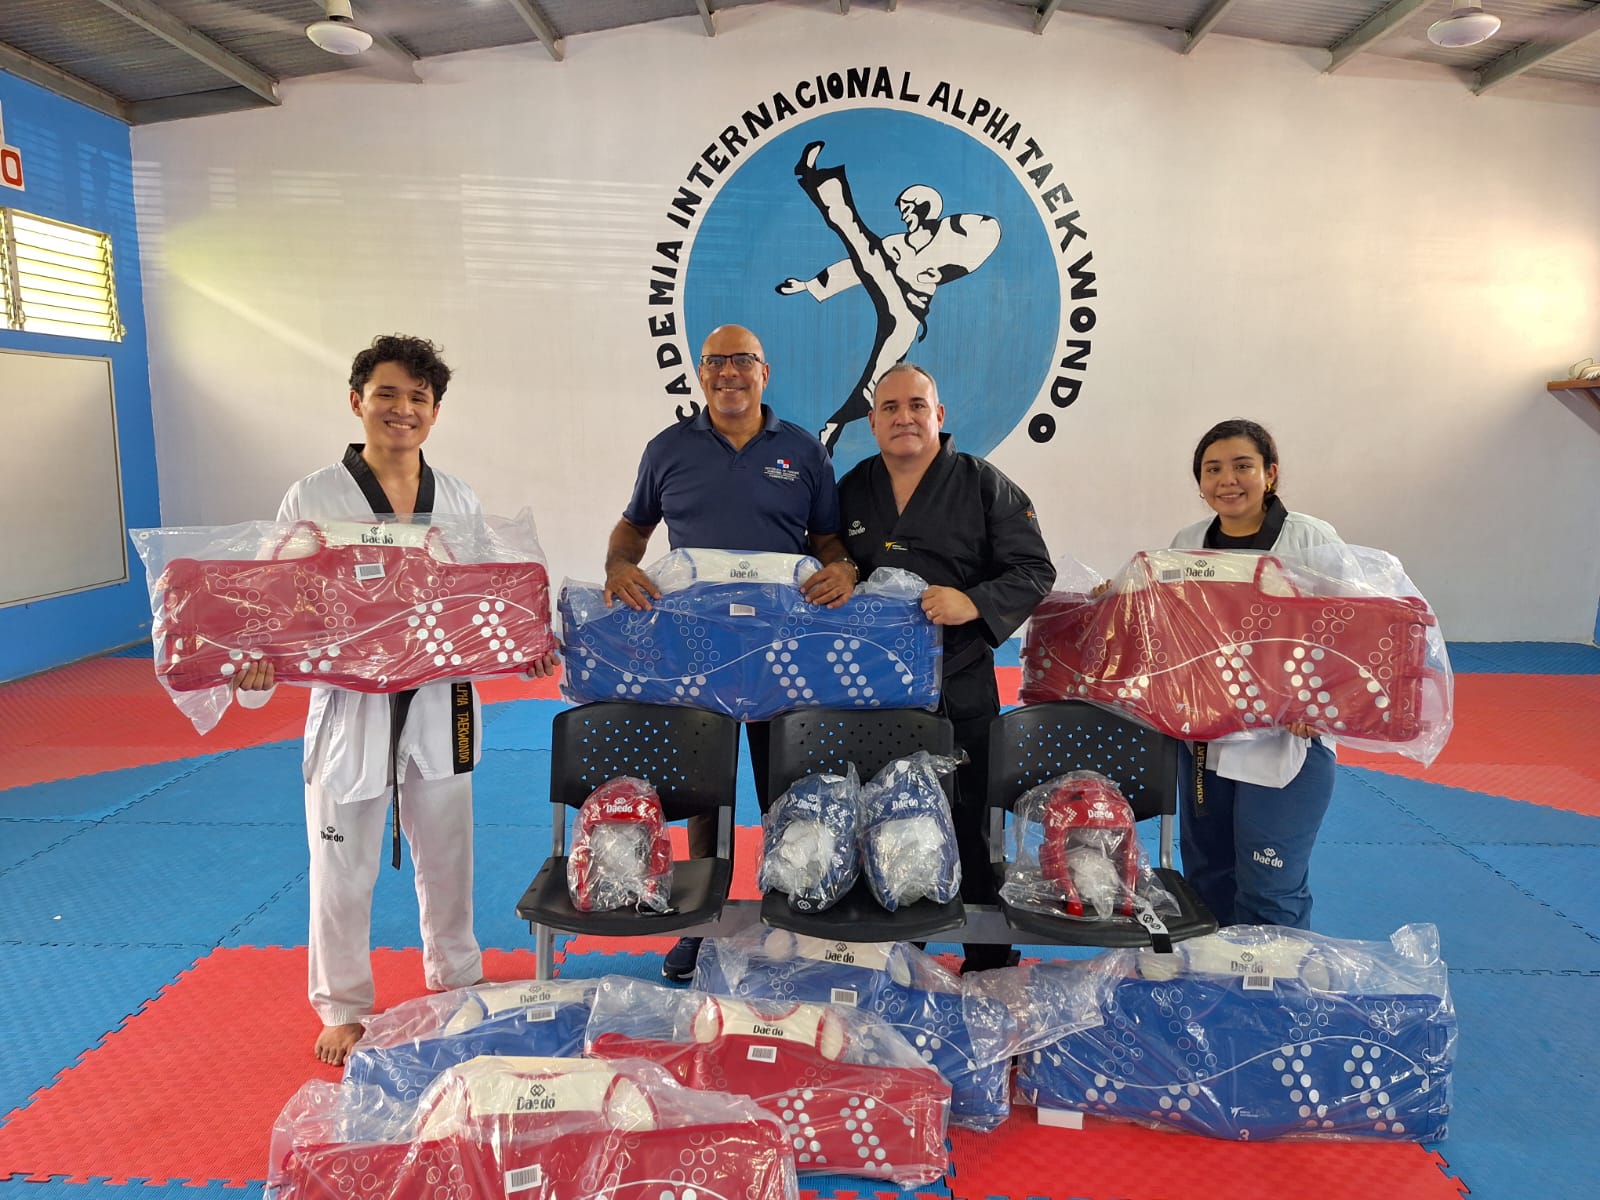 PANDEPORTES dona trajes con sensores al taekwondo panameño